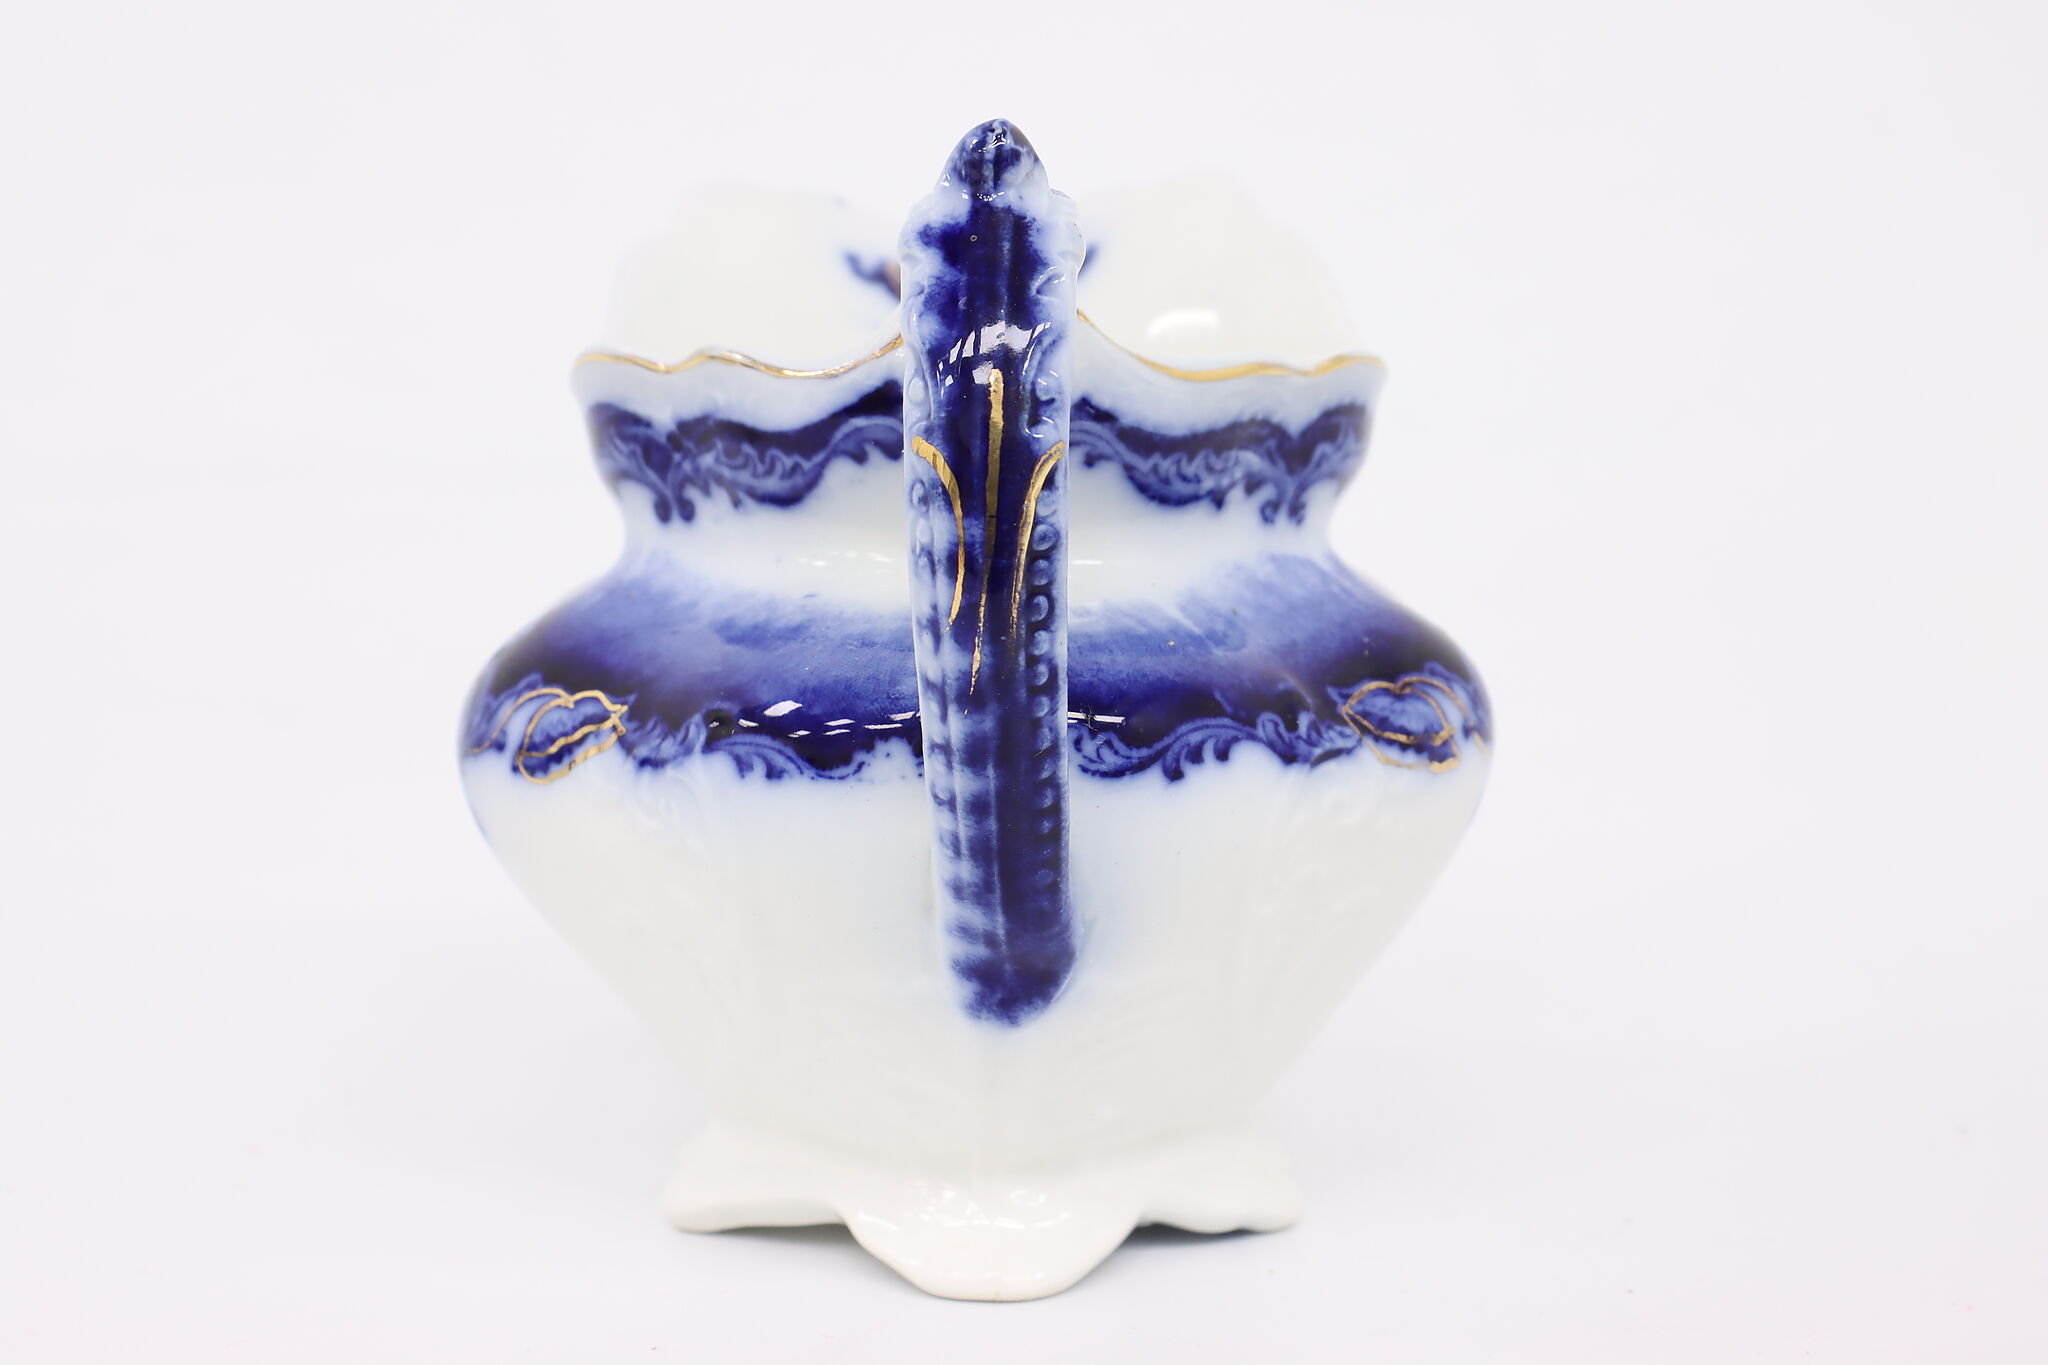 Antique or Vintage Glass Creamer Pitcher Flow Blue Delft Style